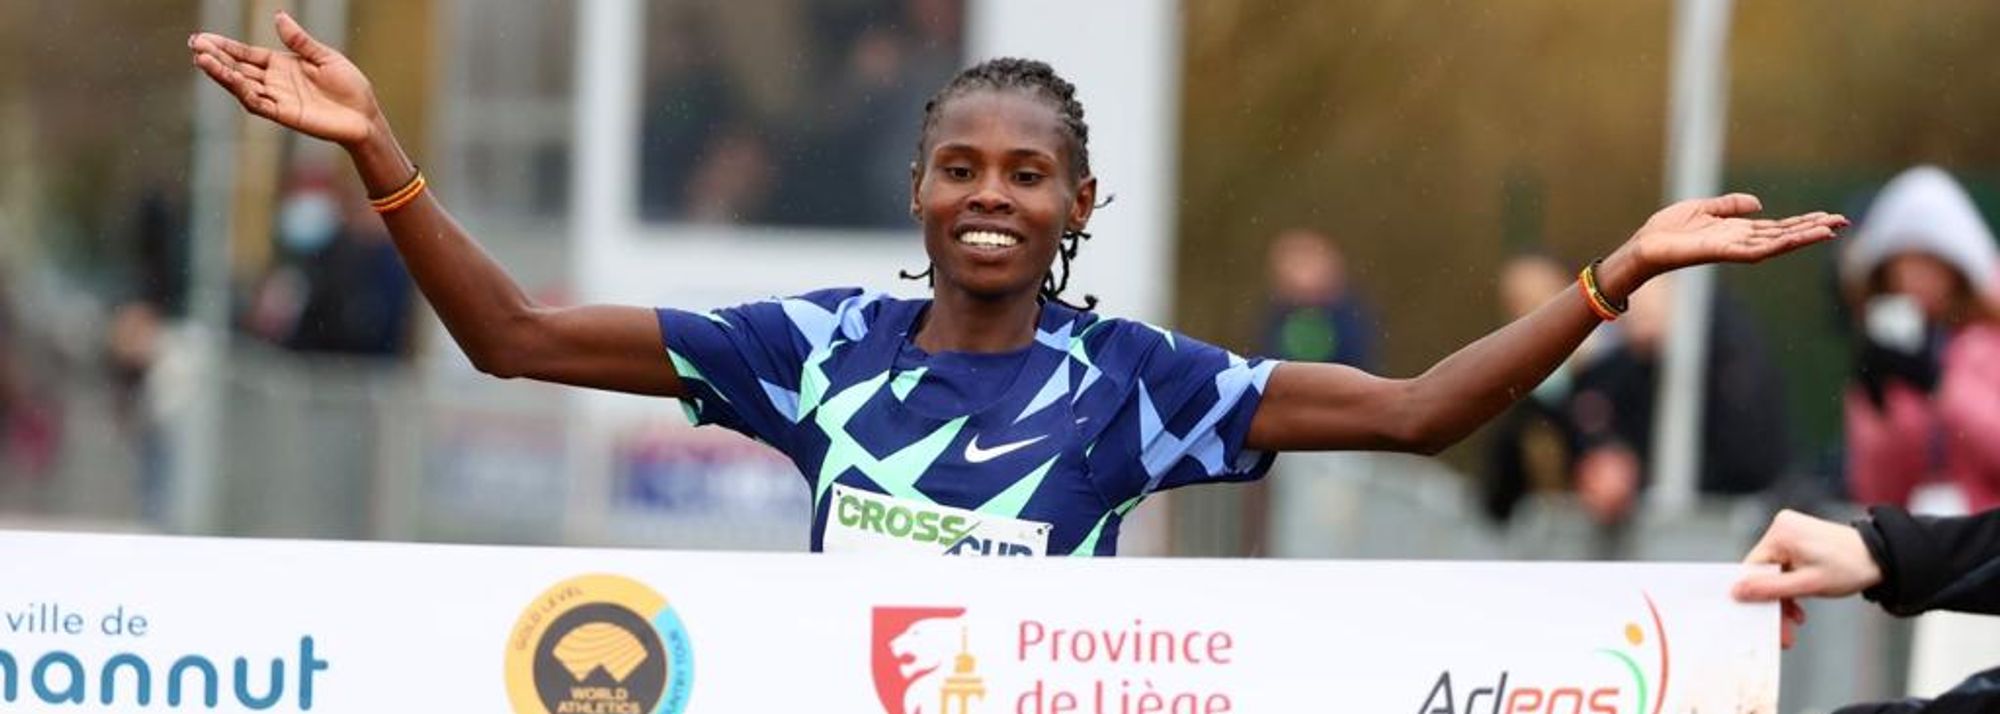 Waithaka and Ndikumwenayo set to clash in the men's race, Olympic steeplechase champion Chemutai confirmed in women's race